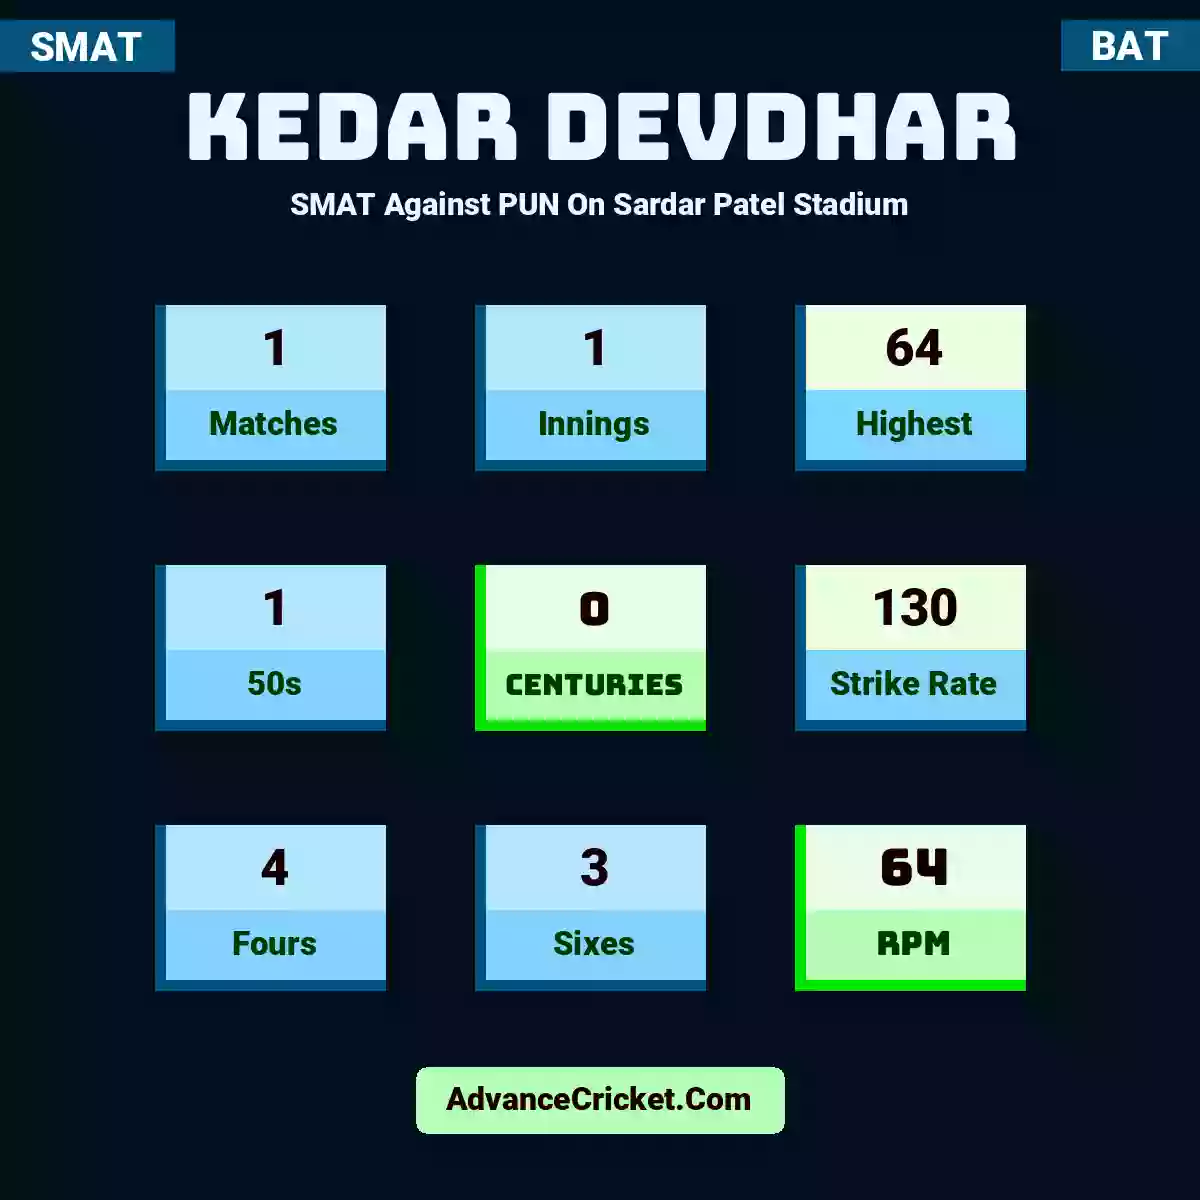 Kedar Devdhar SMAT  Against PUN On Sardar Patel Stadium, Kedar Devdhar played 1 matches, scored 64 runs as highest, 1 half-centuries, and 0 centuries, with a strike rate of 130. K.Devdhar hit 4 fours and 3 sixes, with an RPM of 64.